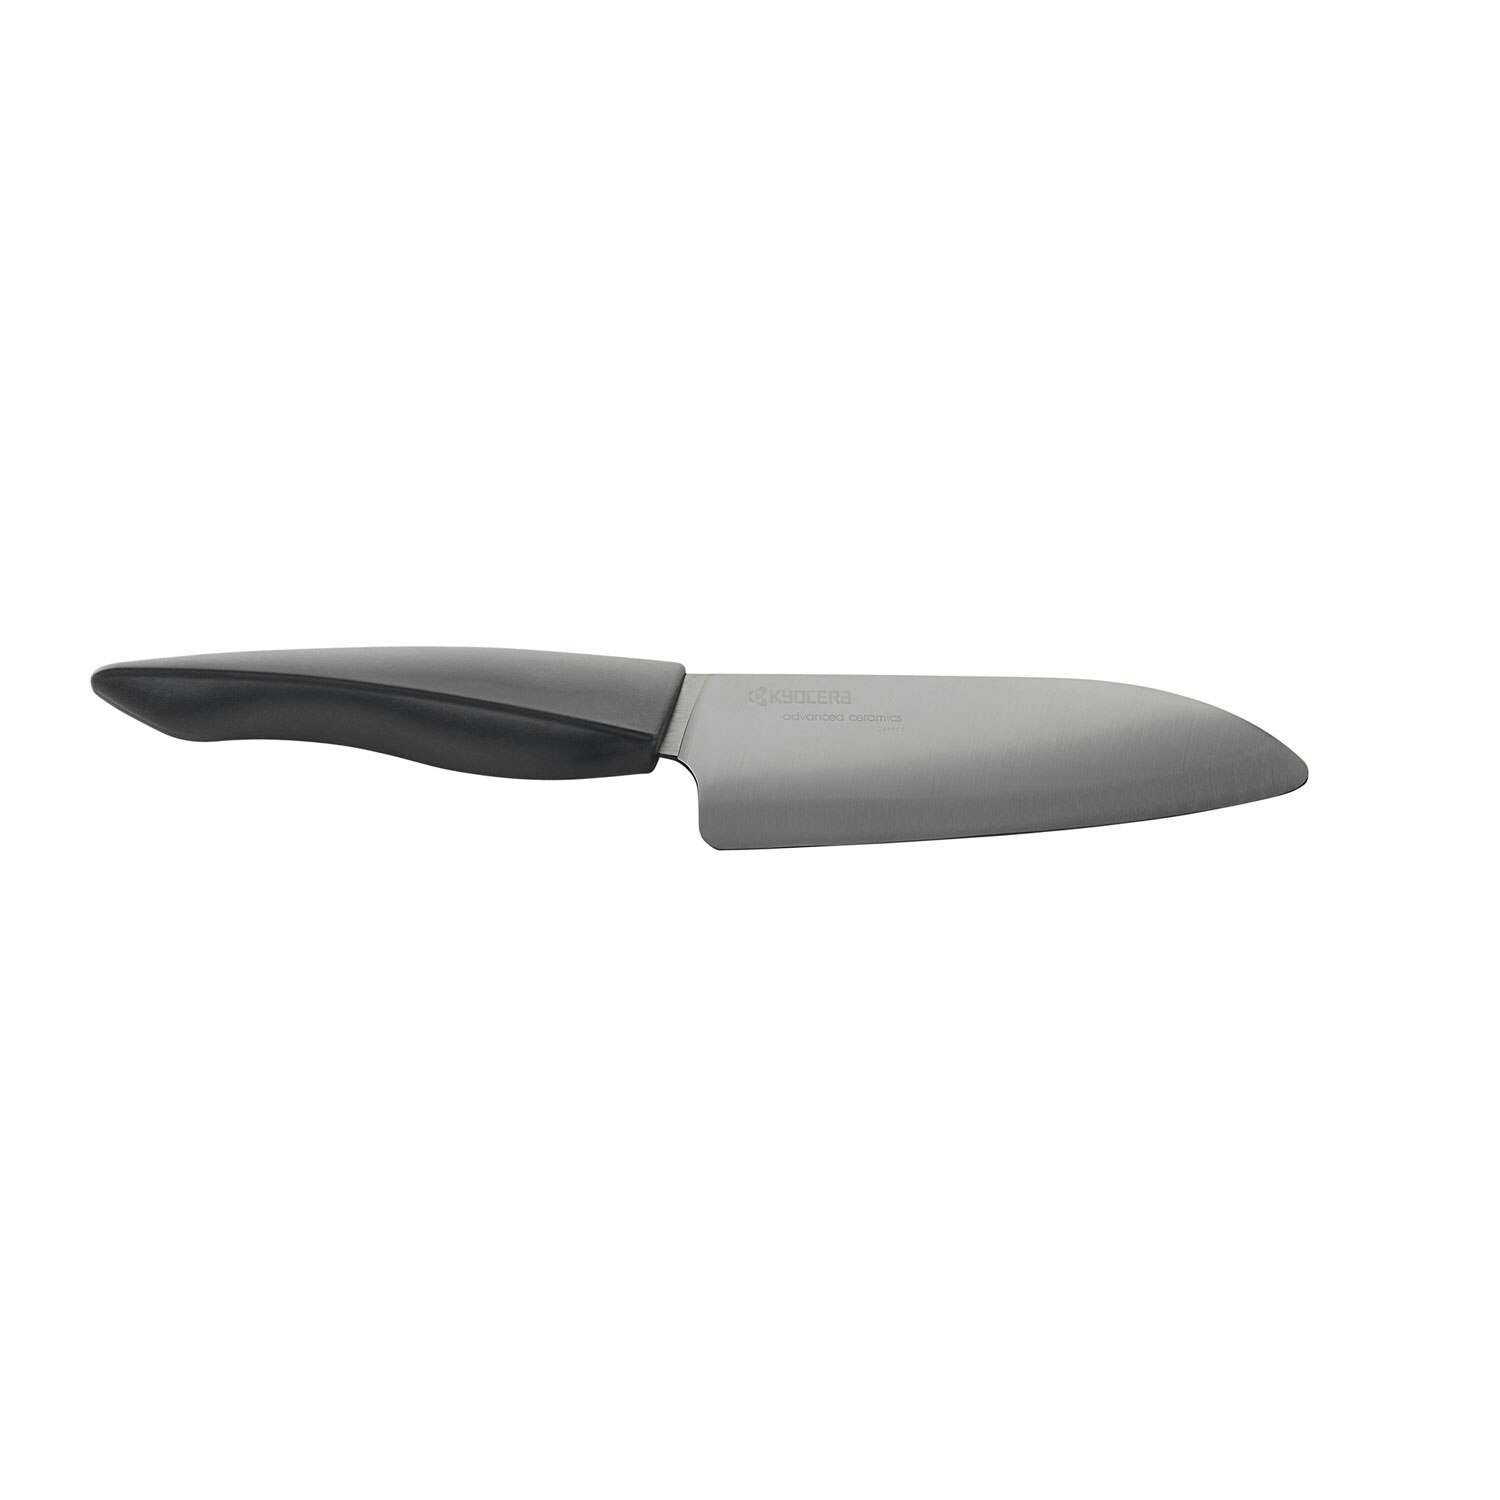 https://royaldesign.com/image/2/kyocera-shin-santoku-knife-14-cm-black-0